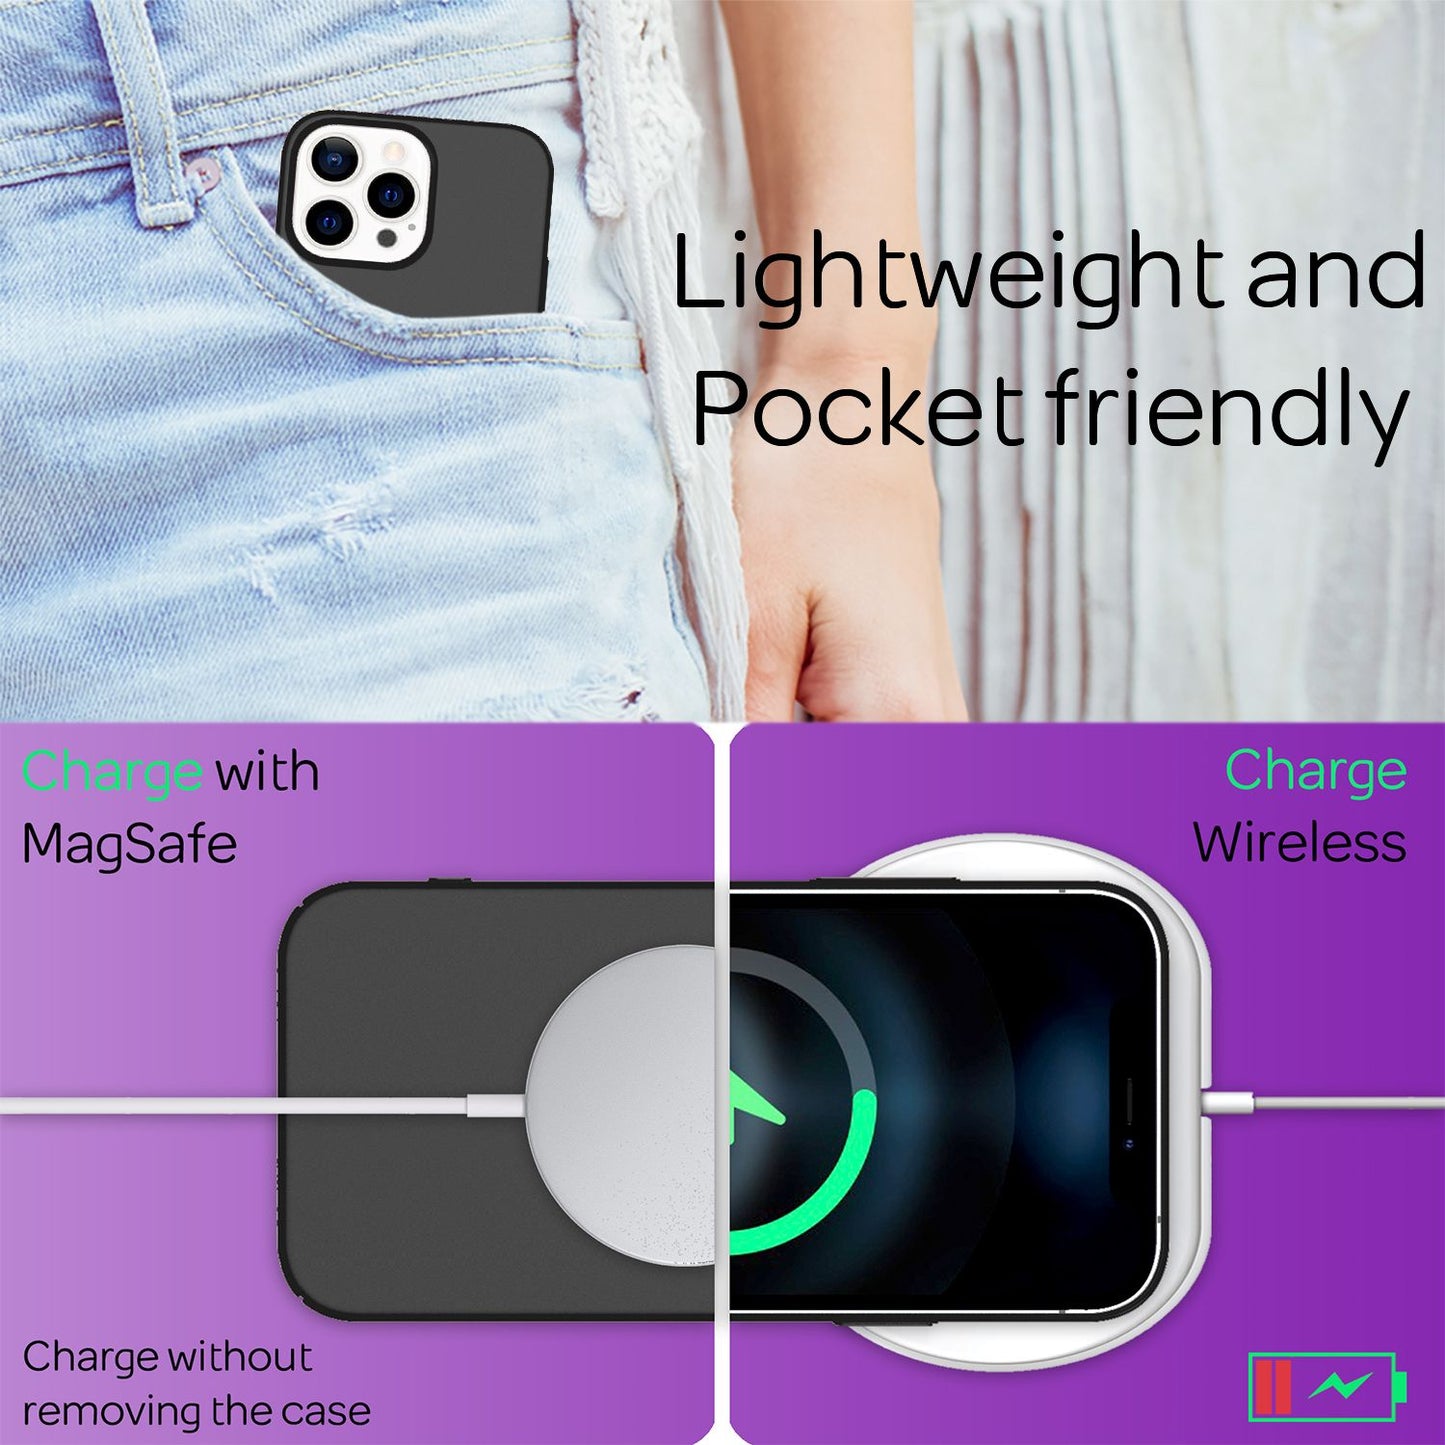 NALIA 0,5mm Dünne Handy Hülle für iPhone 13 Pro Max, Matt Hard Case Cover Bumper